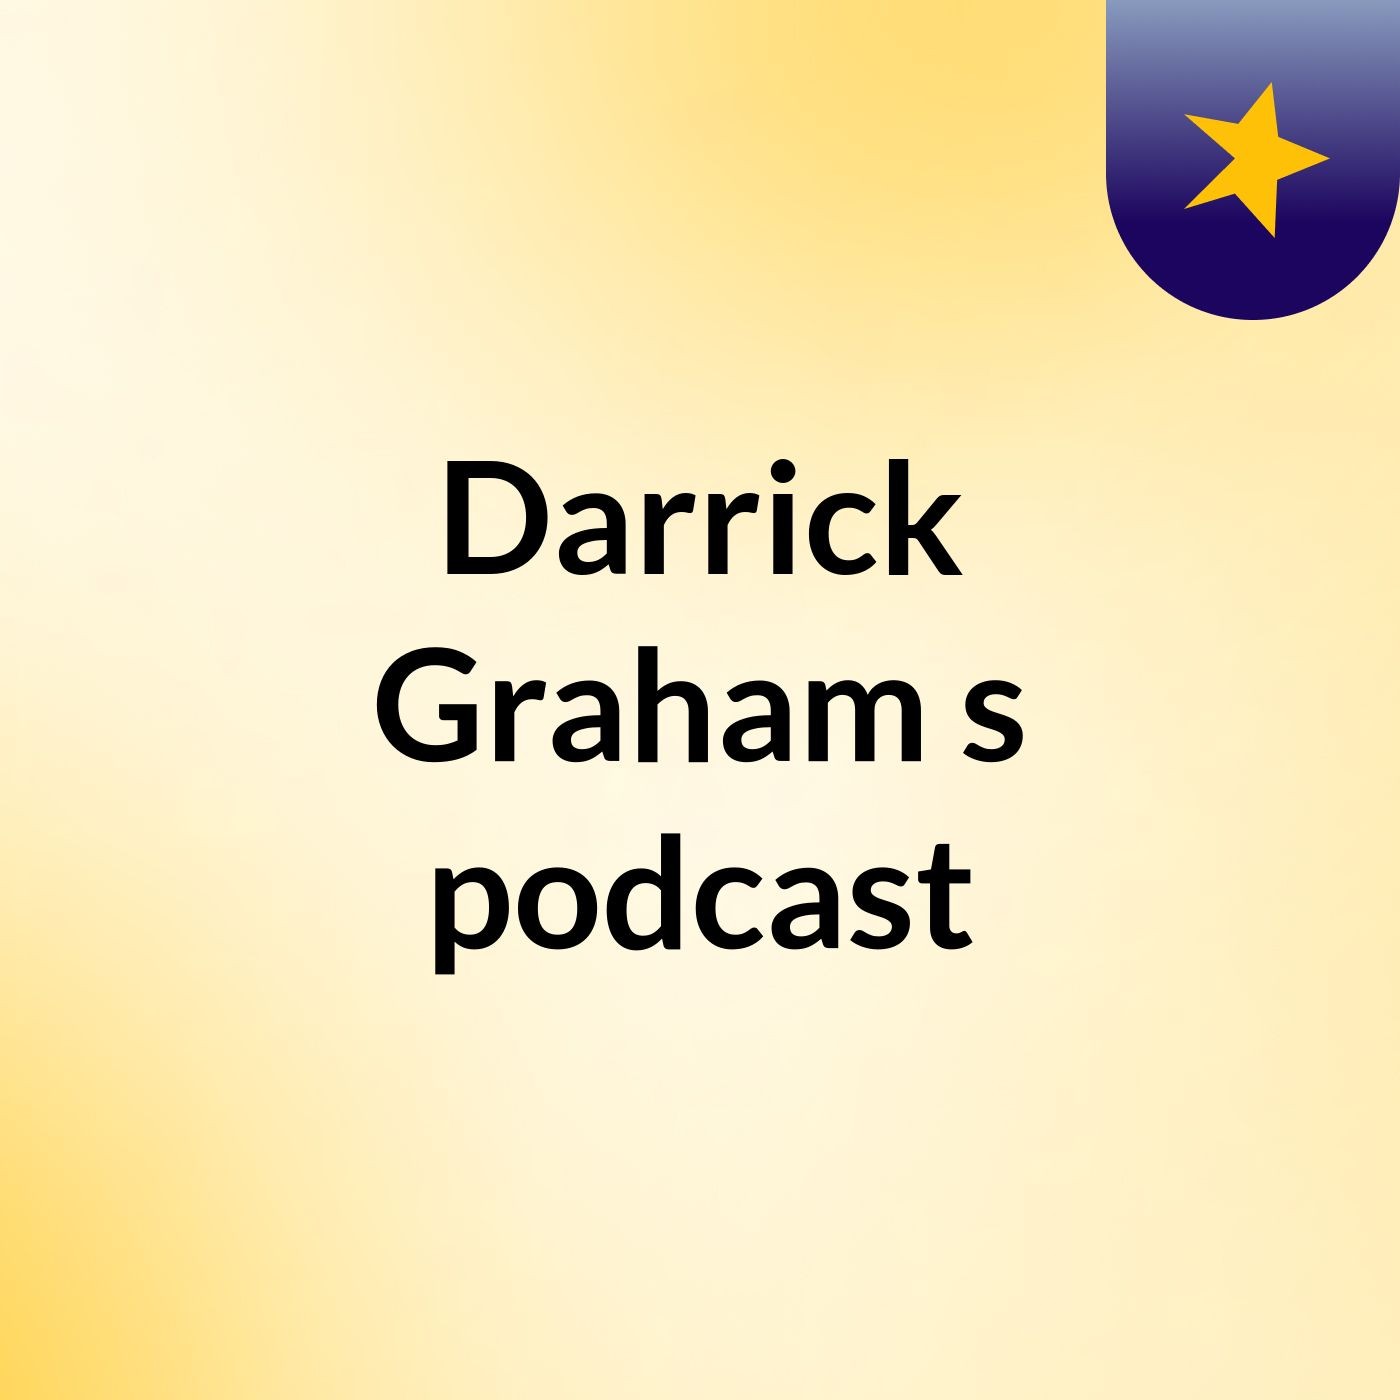 Darrick Graham's podcast